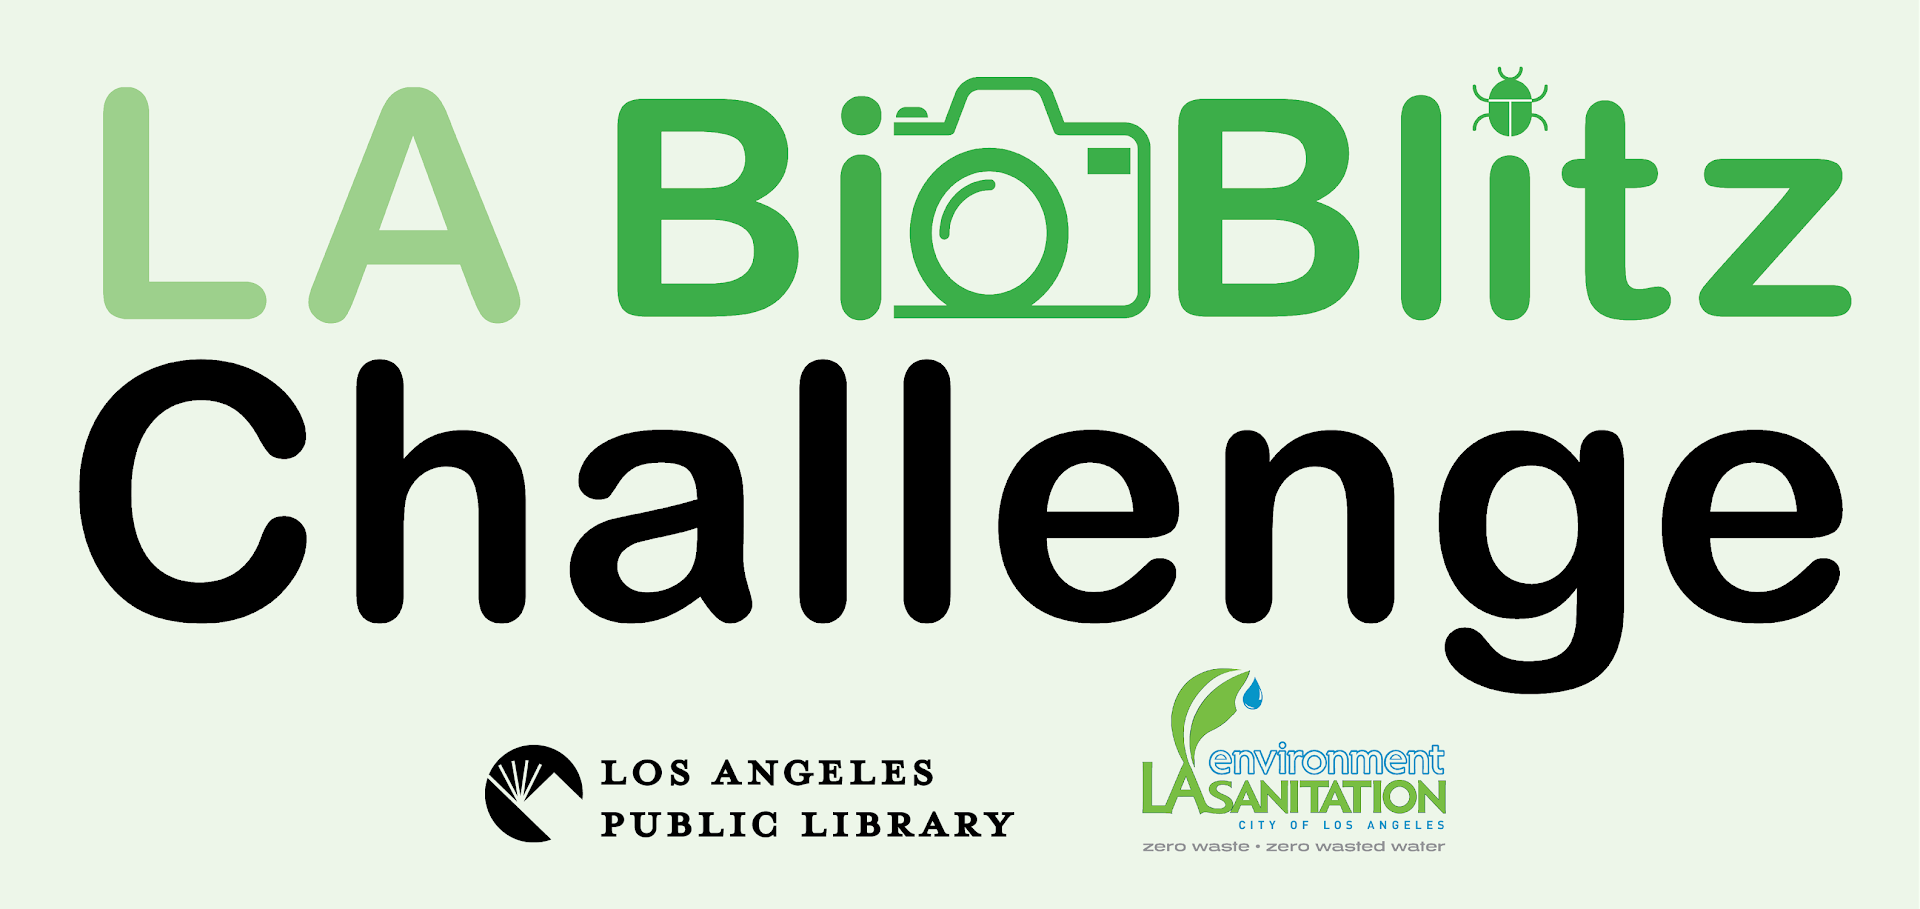 LA BioBlitz Challenge by LA Public Library & LA Sanitation